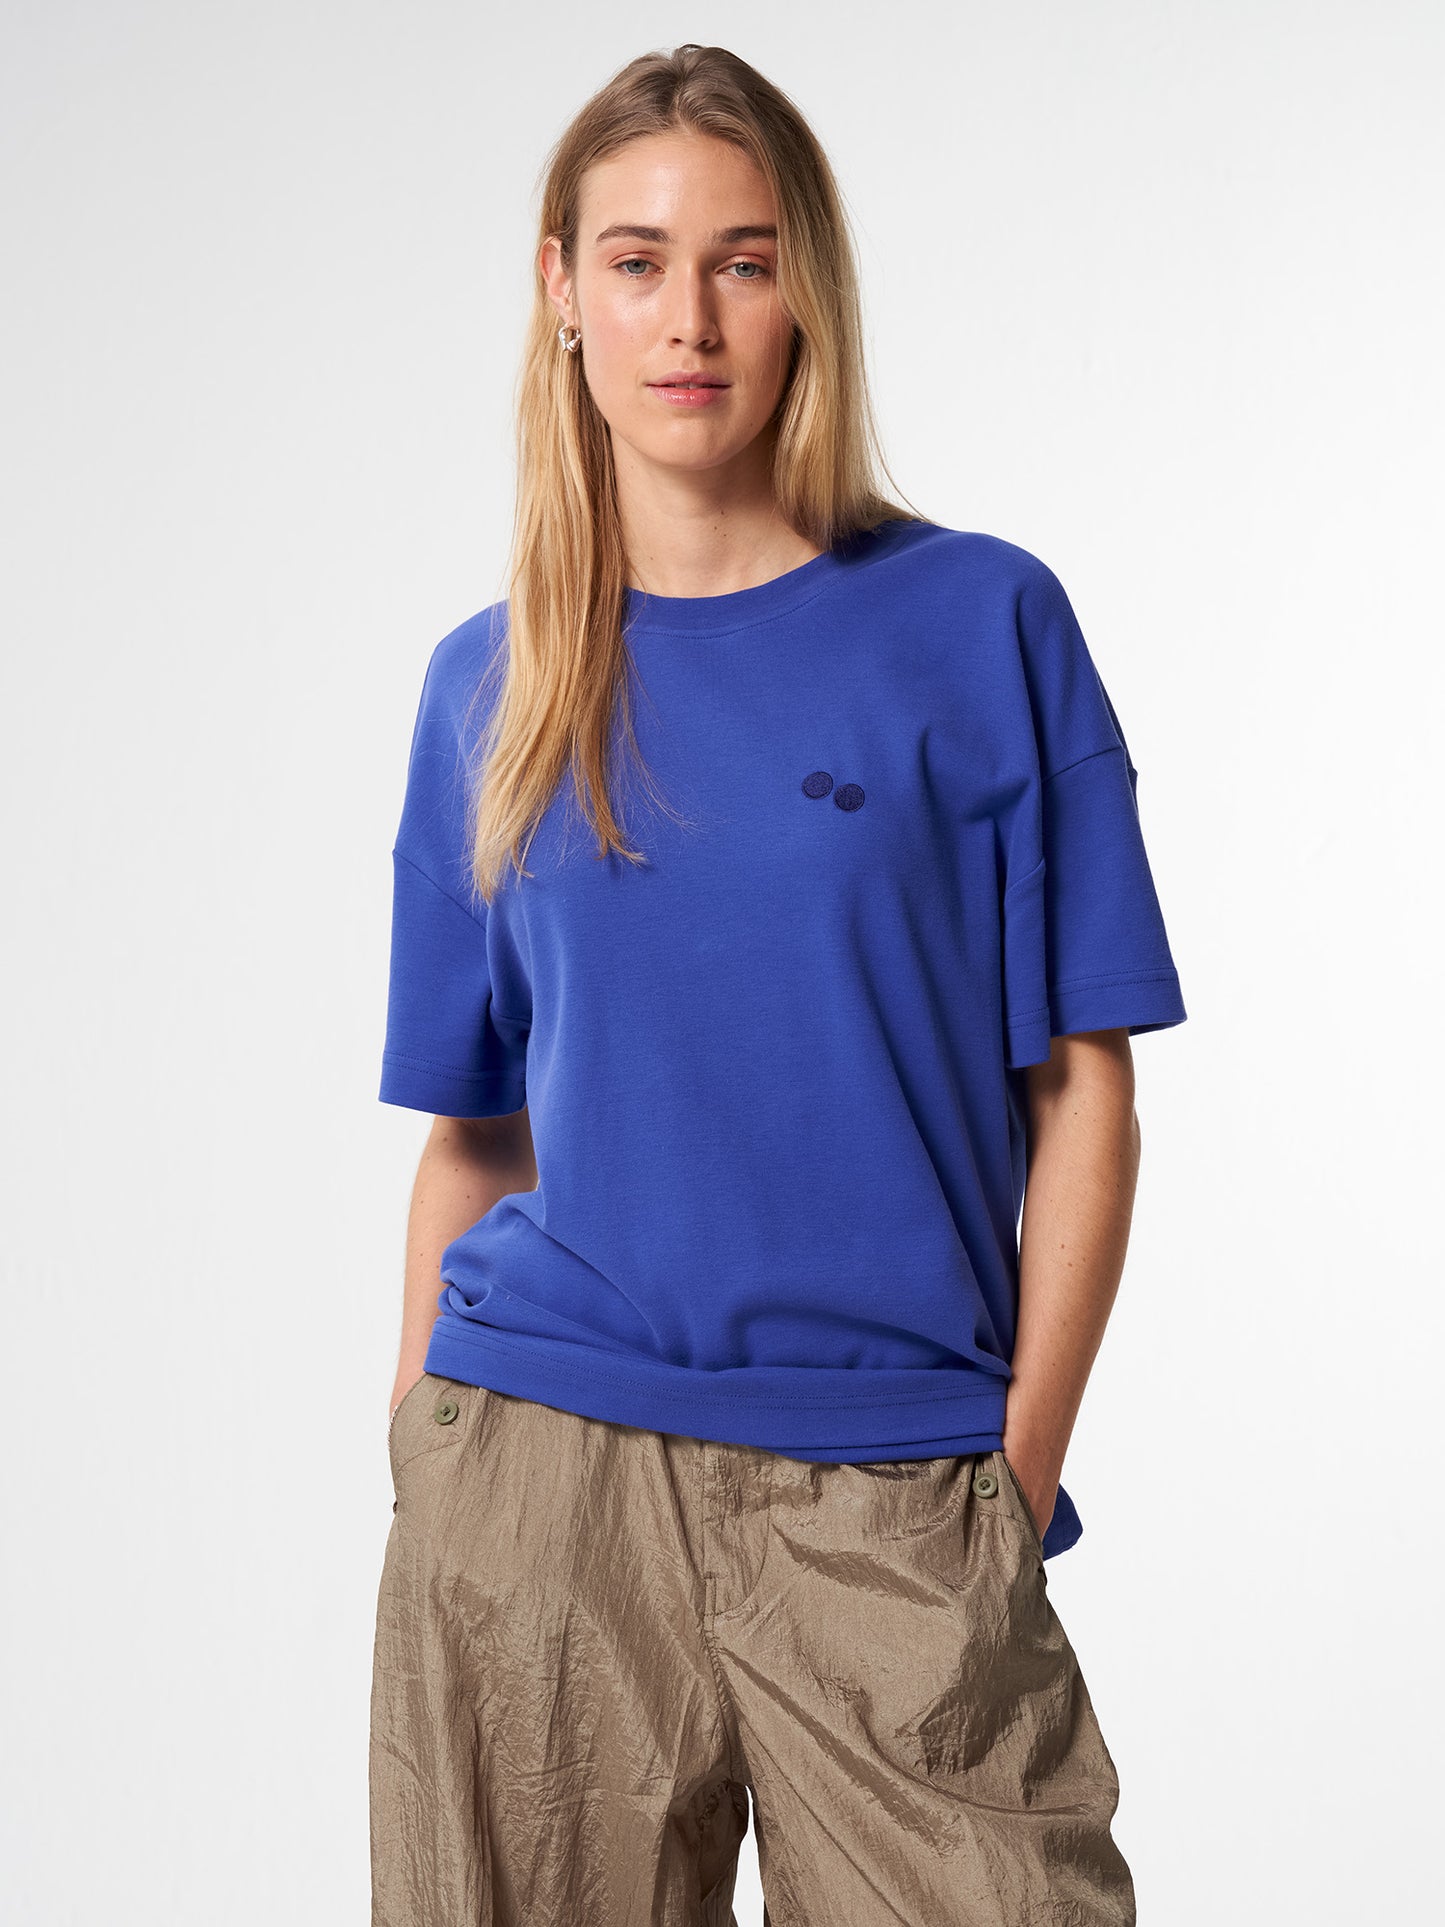 pinqponq-Tshirt-Unisex-Poppy-Blue-model-front